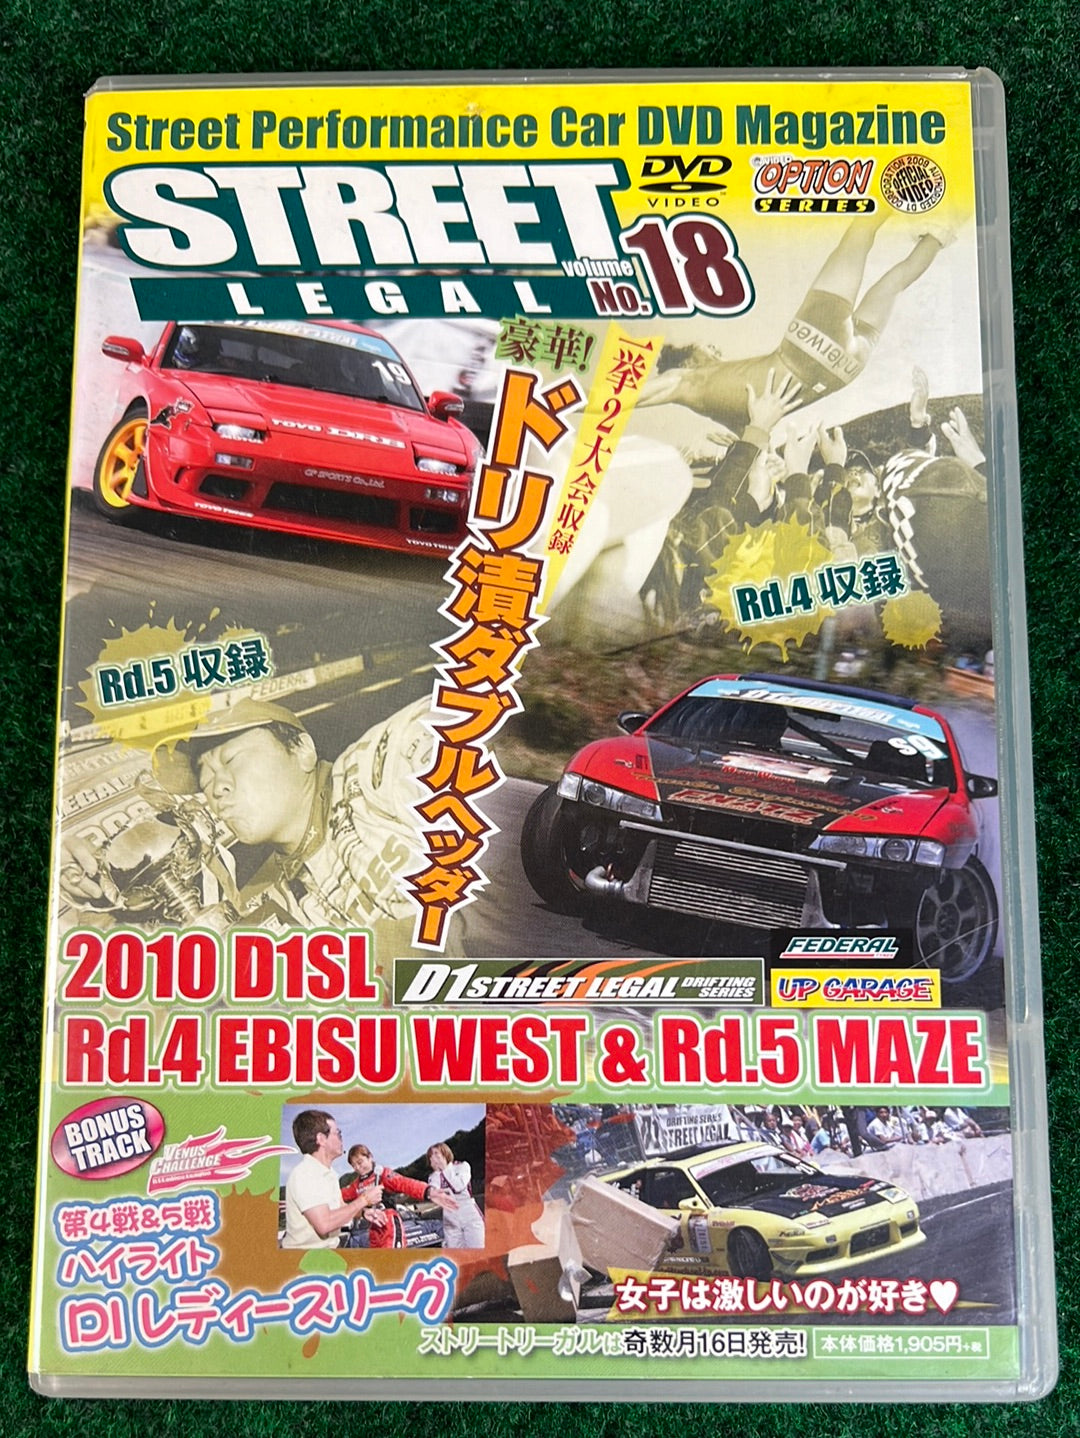 STREET LEGAL DVD - Vol. 18